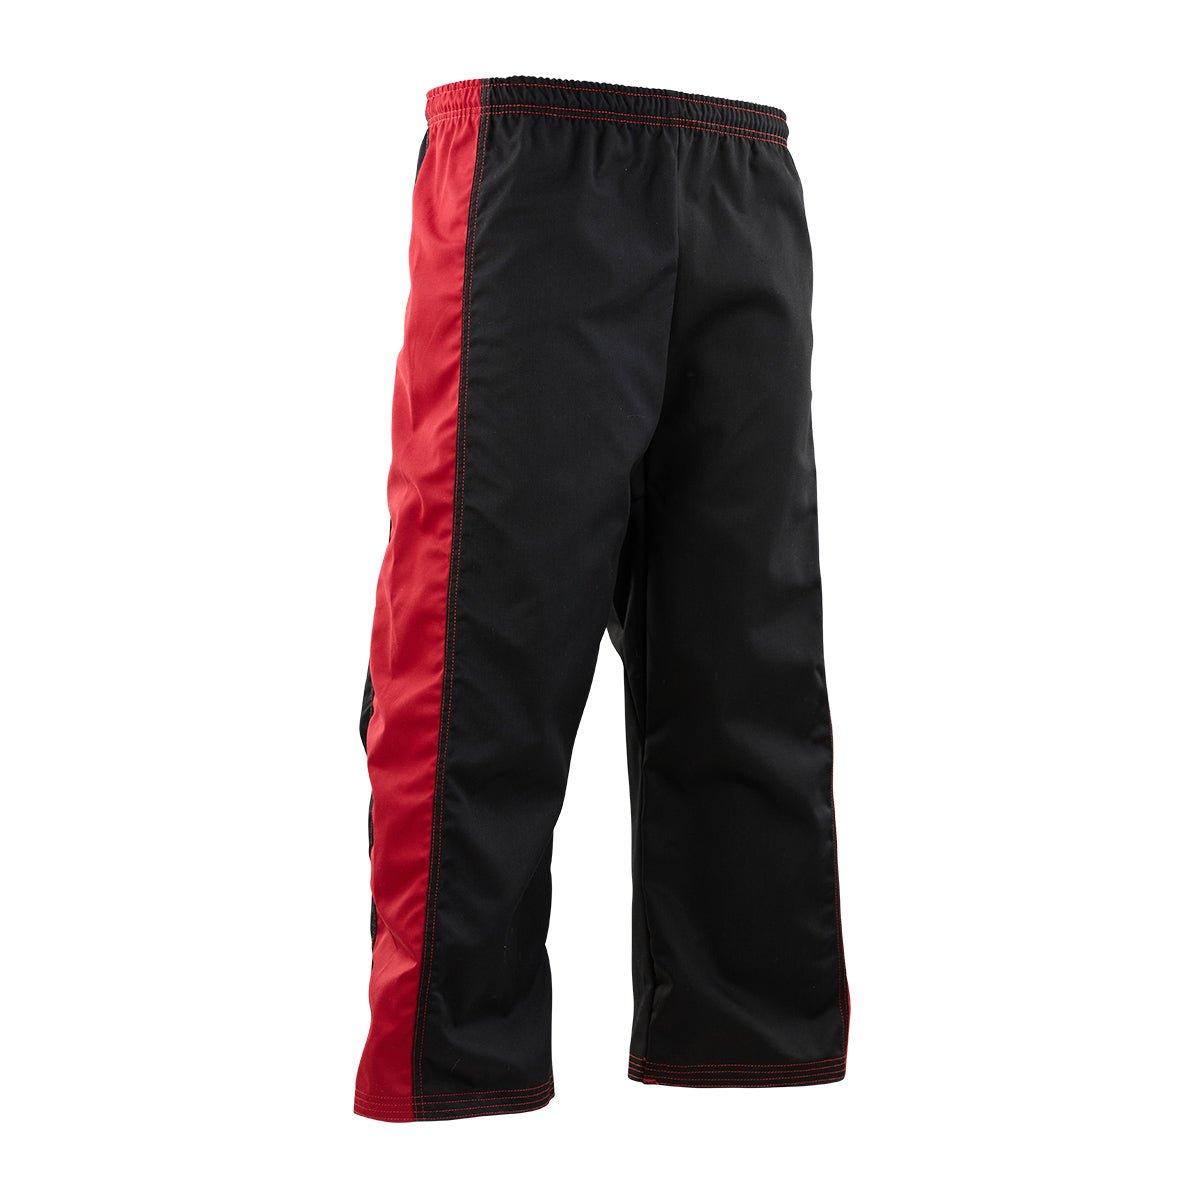 Tri-Color Program Uniform Pants Black/Grey/Red